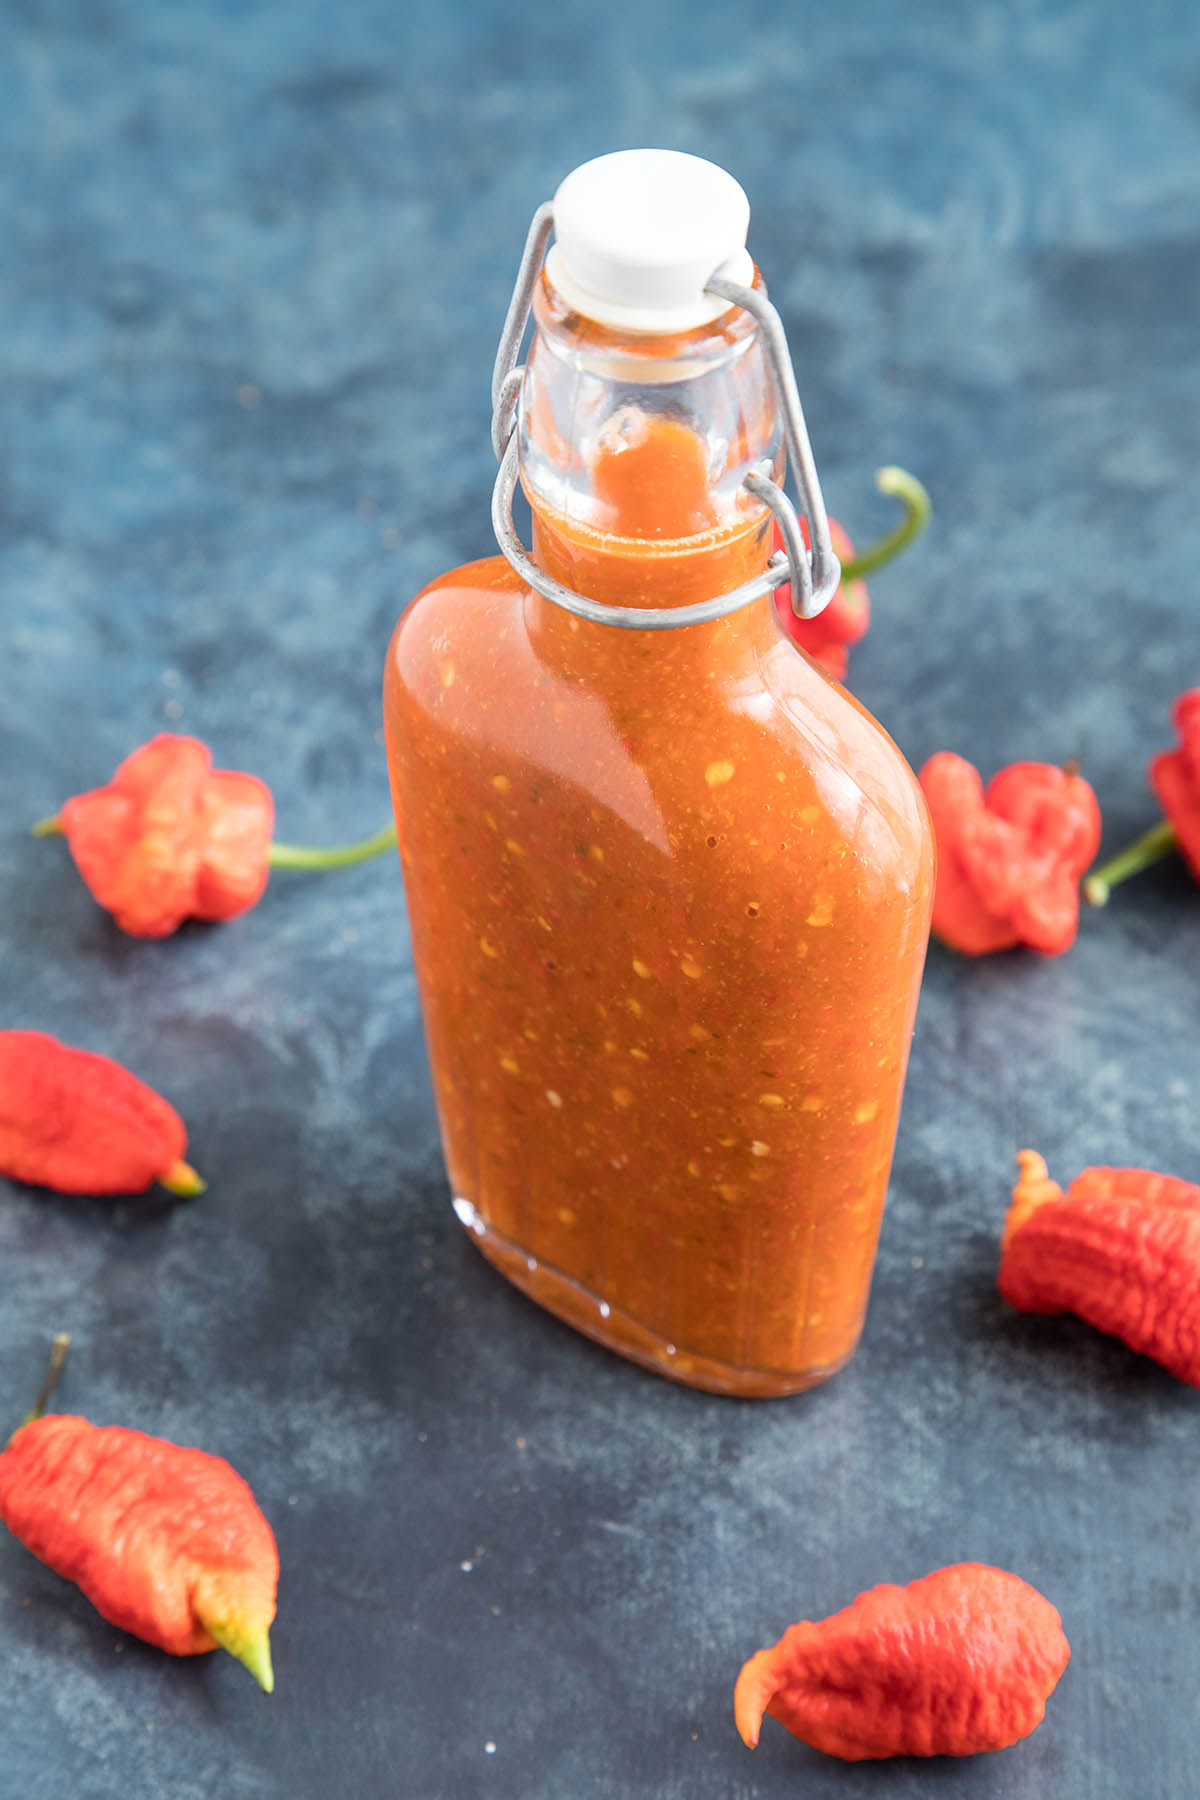 Honey Roasted Hot Pepper Hot Sauce – Recipe